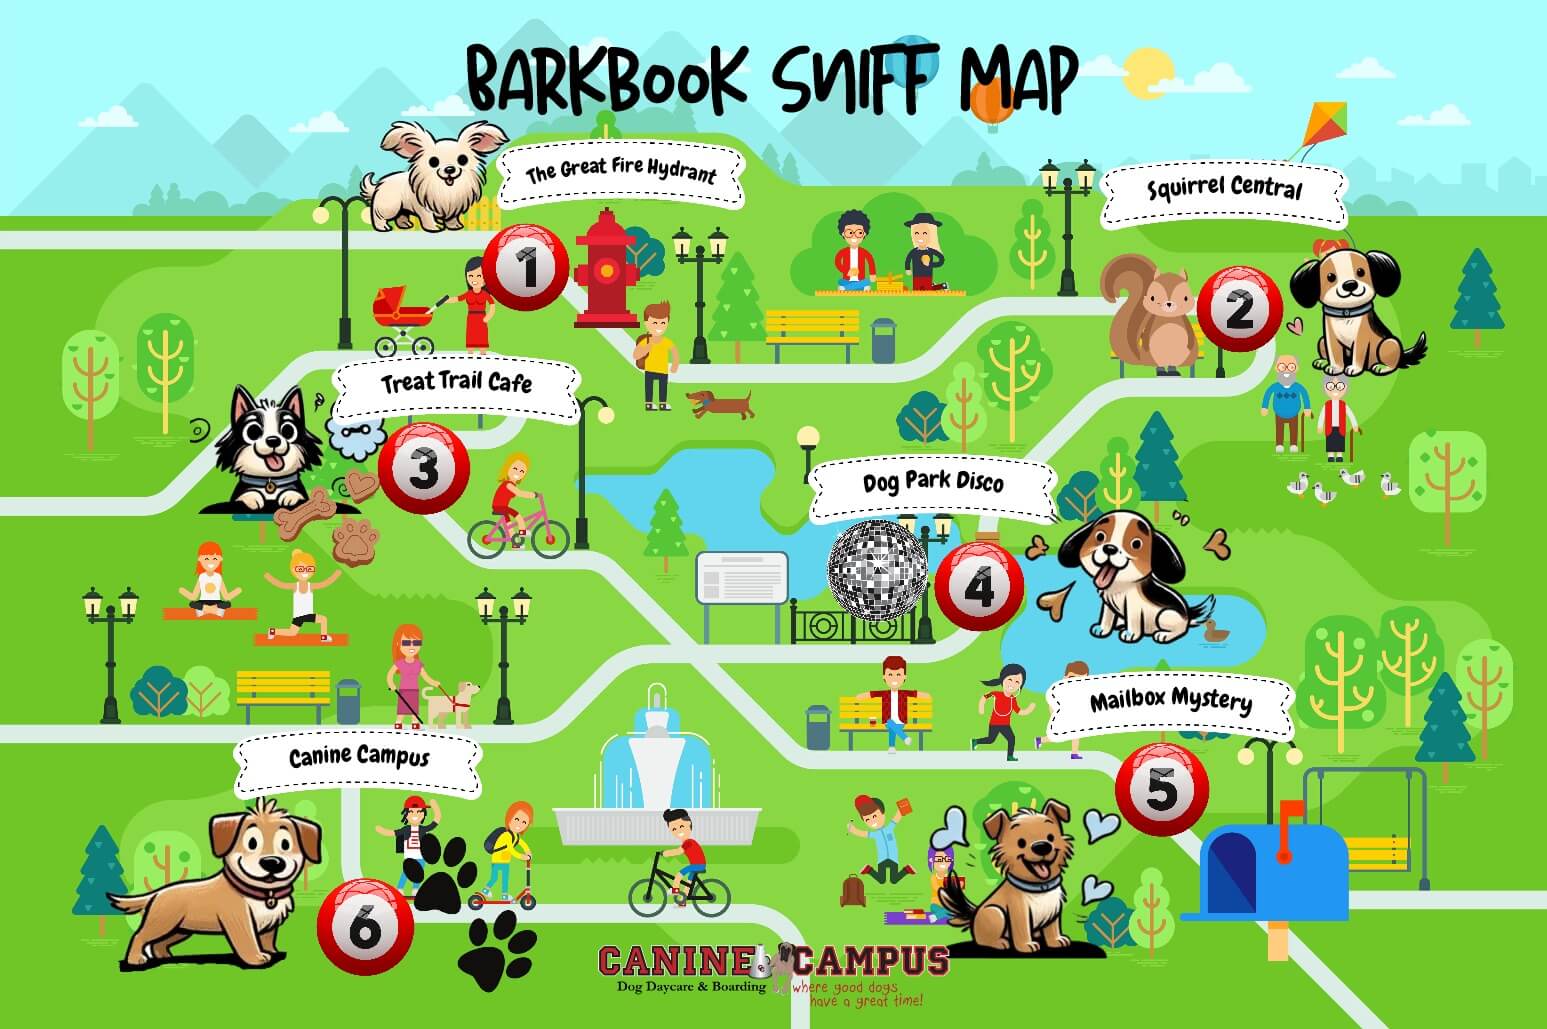 Barkbook Sniff Map